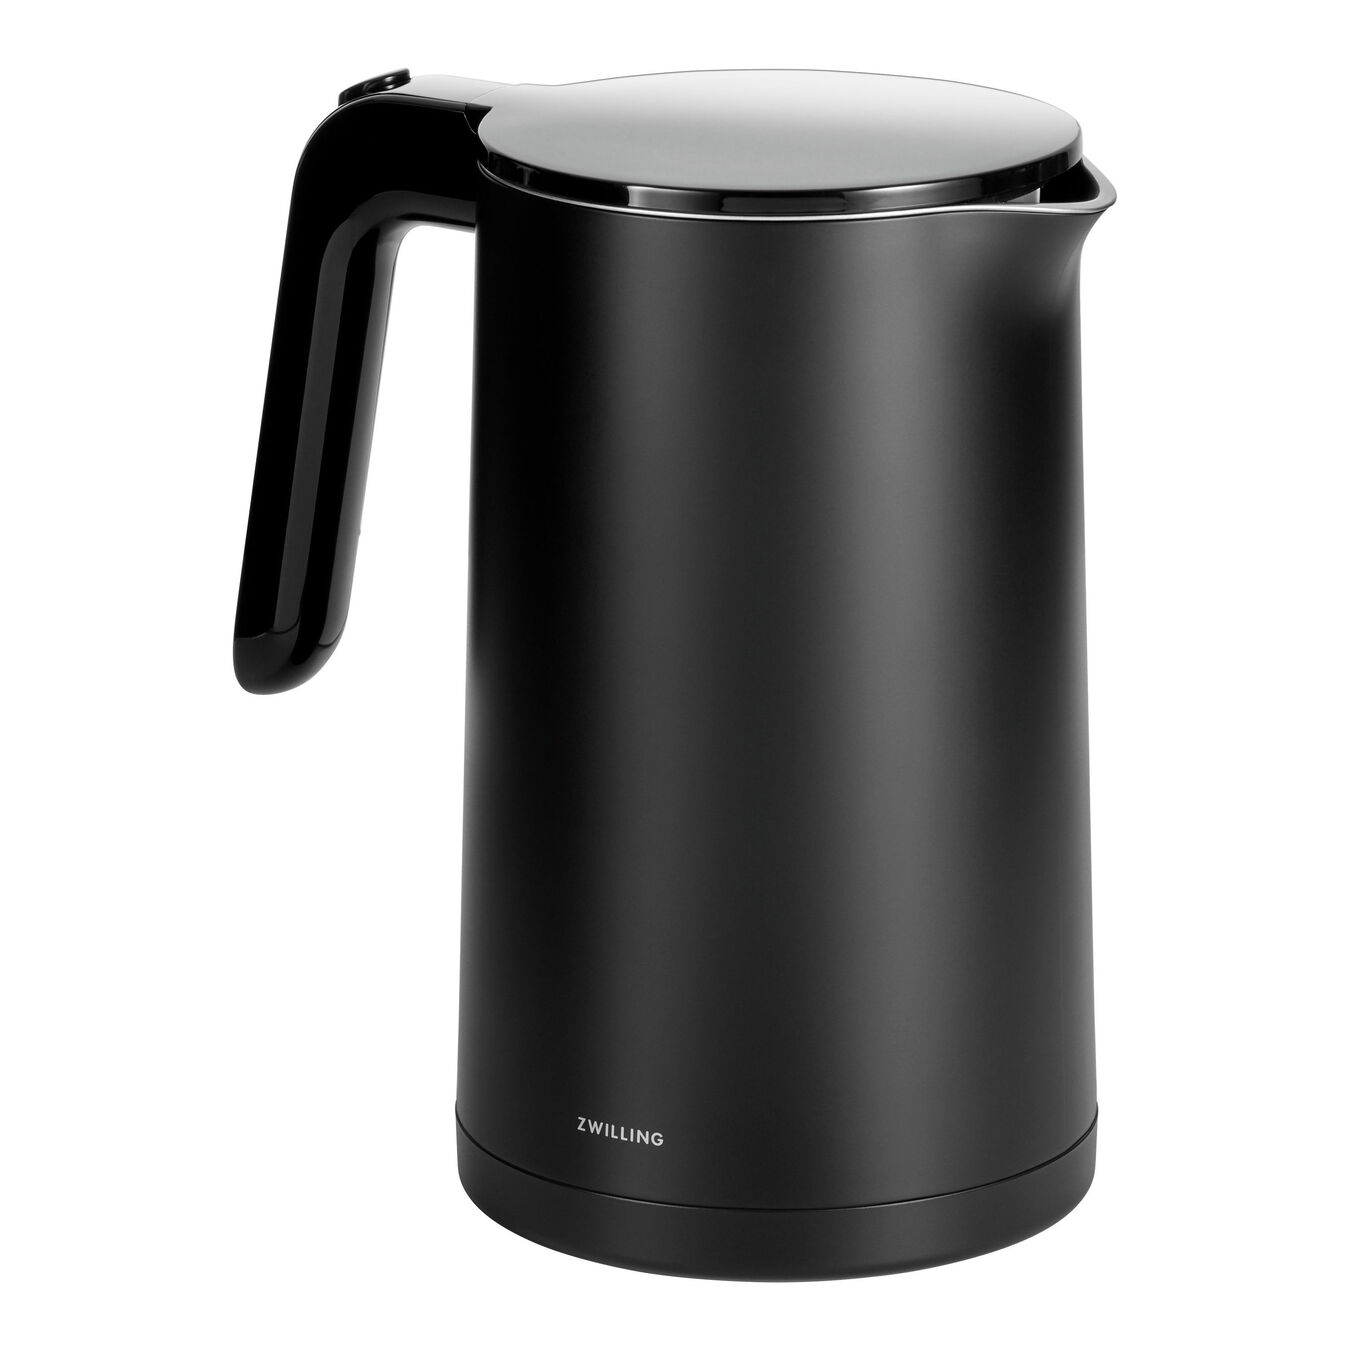 Electric kettle - black,,large 1